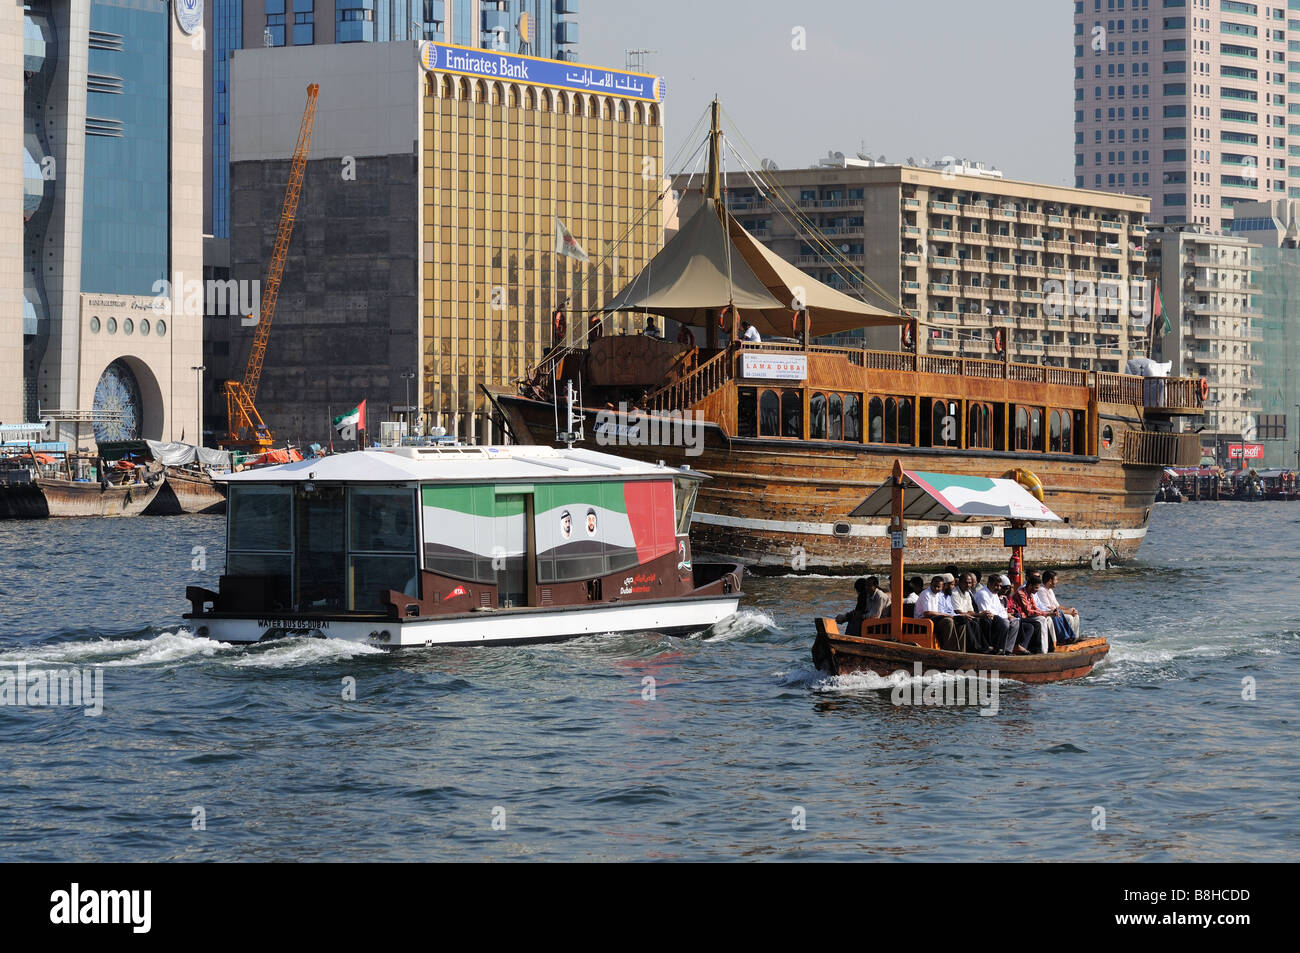 Abra ferrying passengers across the Dubai creek Stock Photo